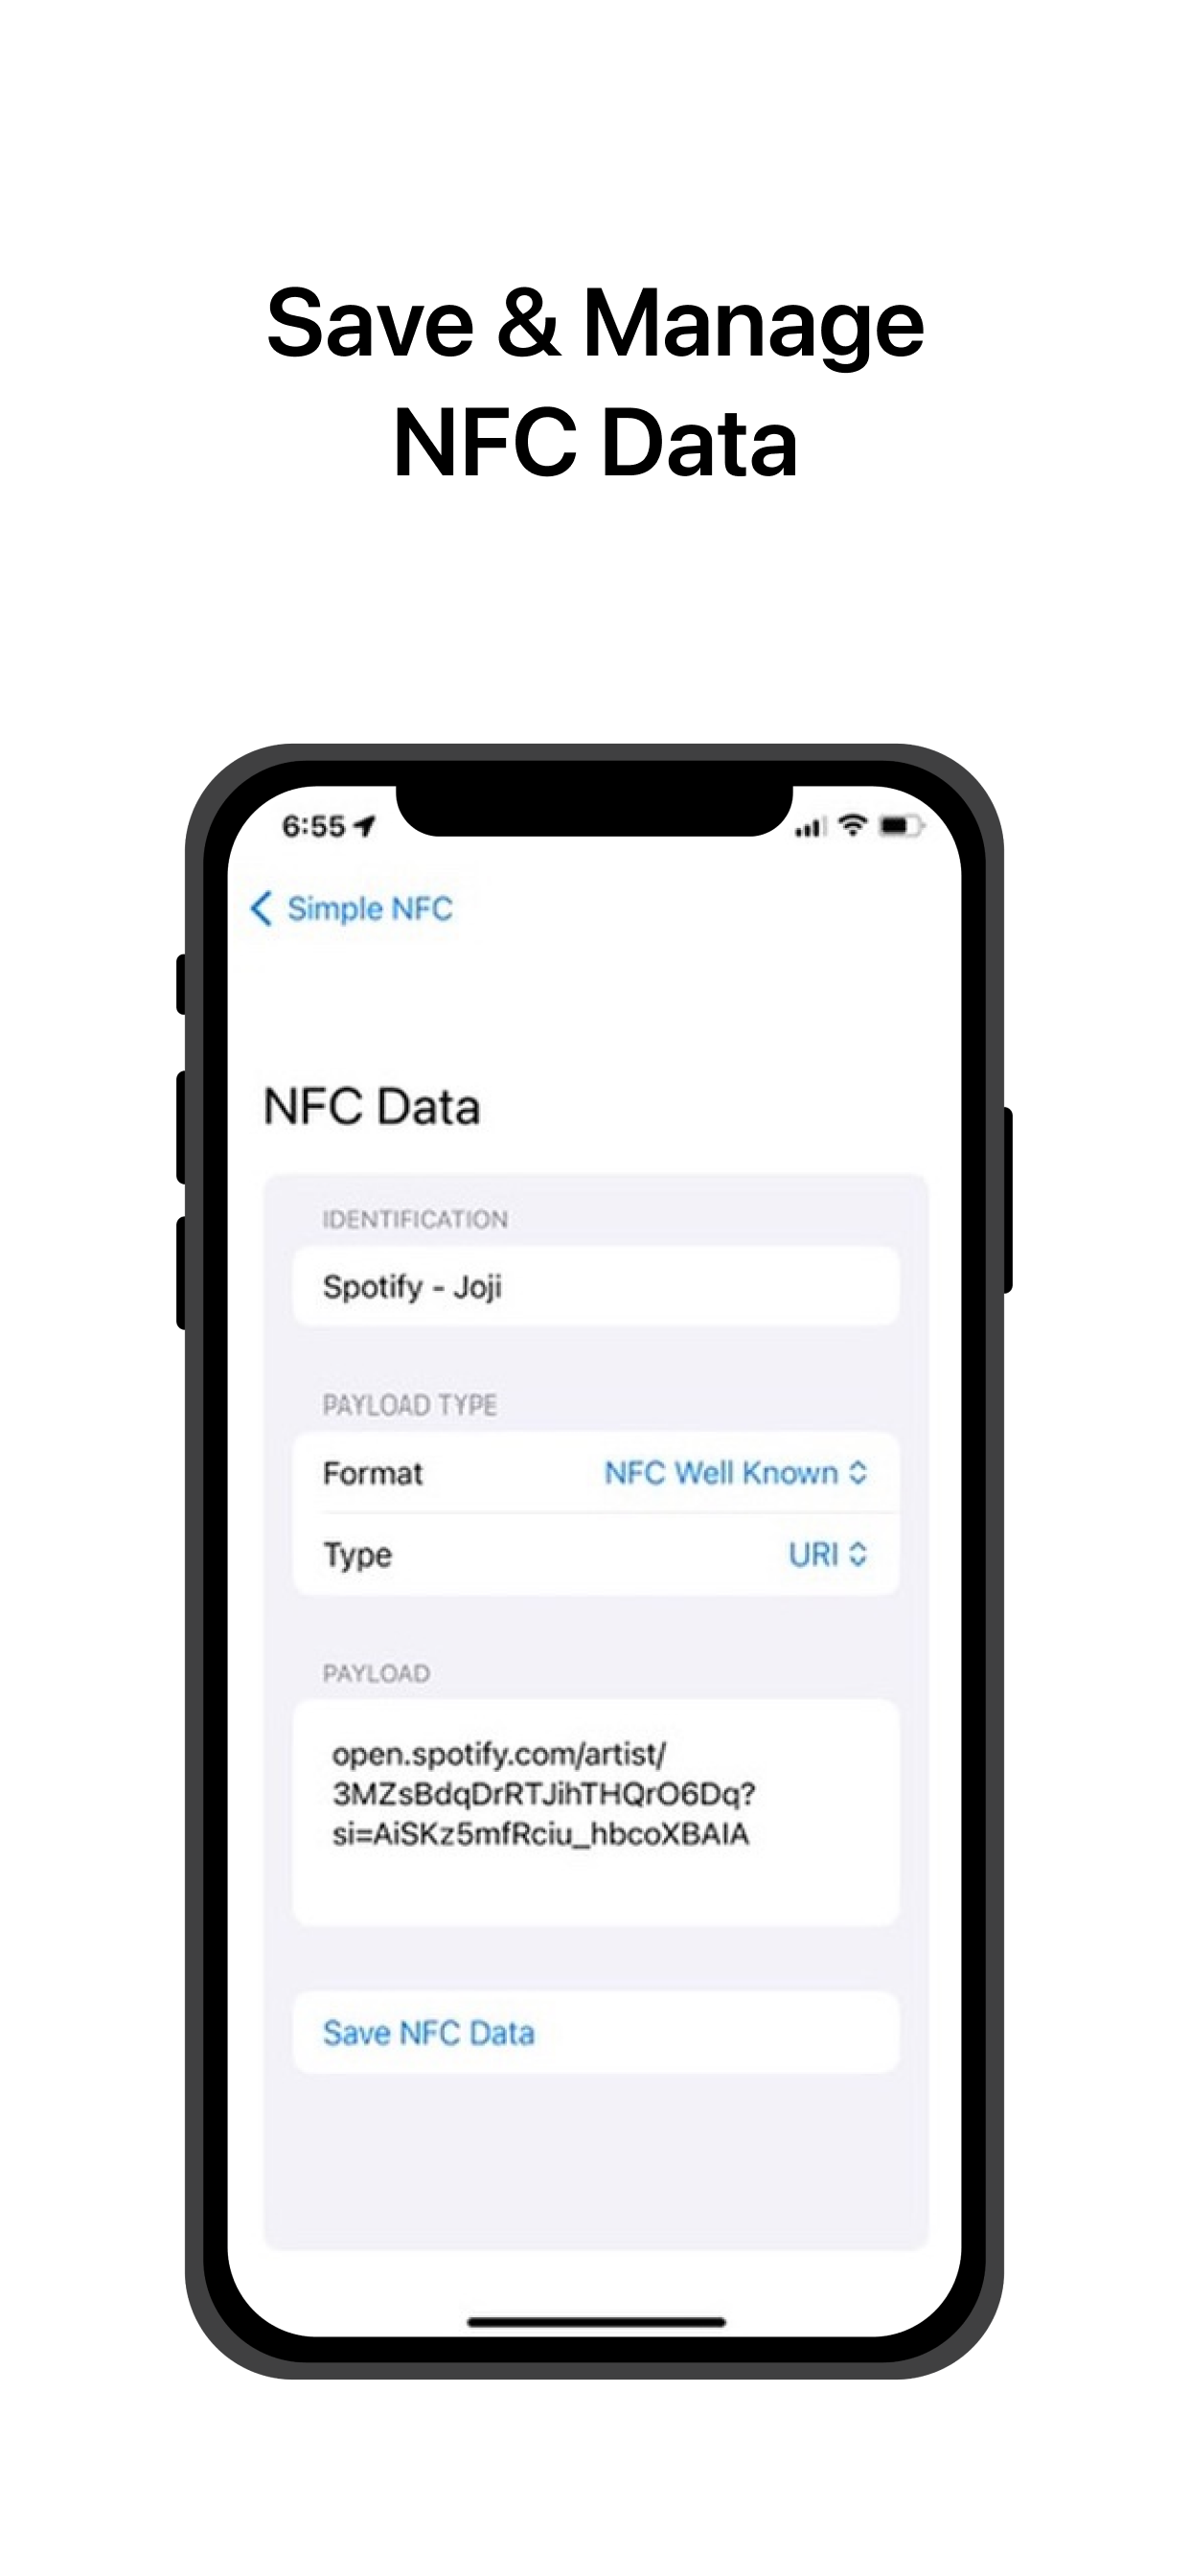 Save & Manage NFC Data